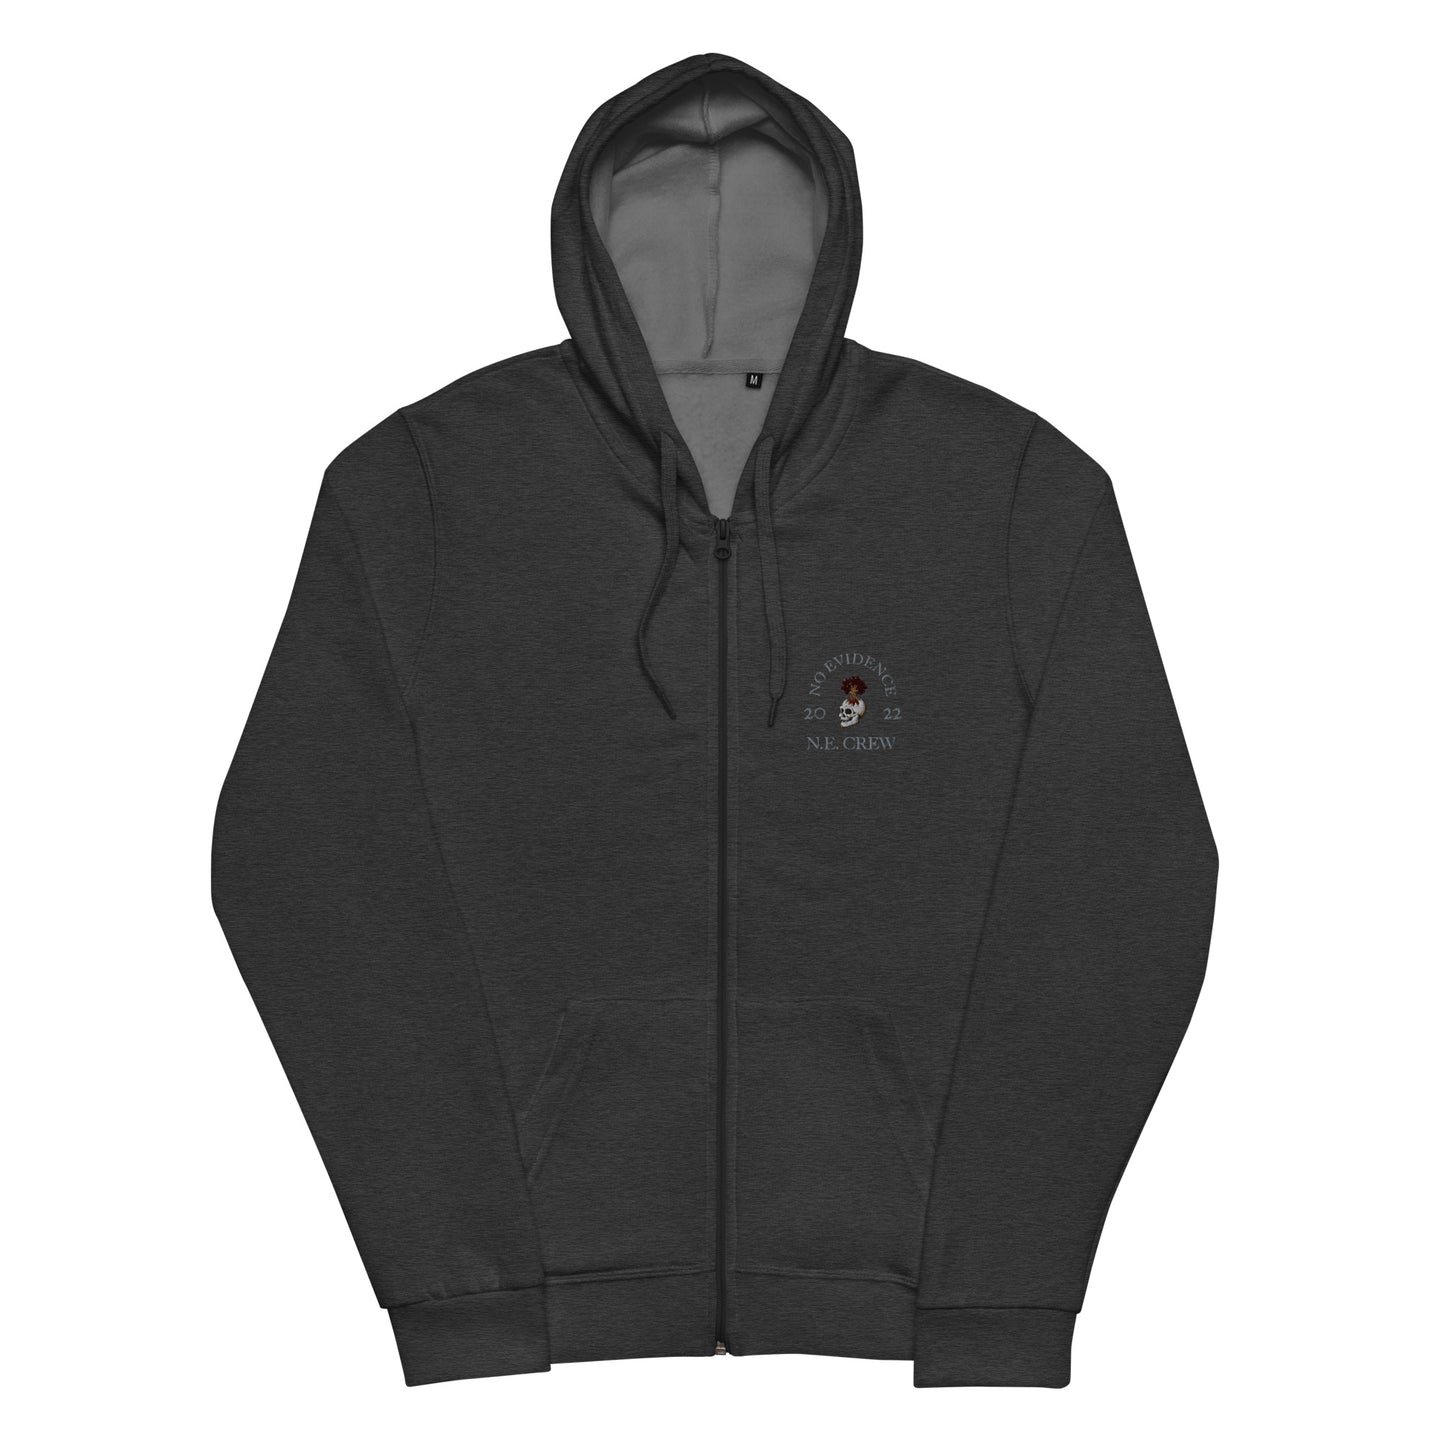 Unisex NE basic zip hoodie